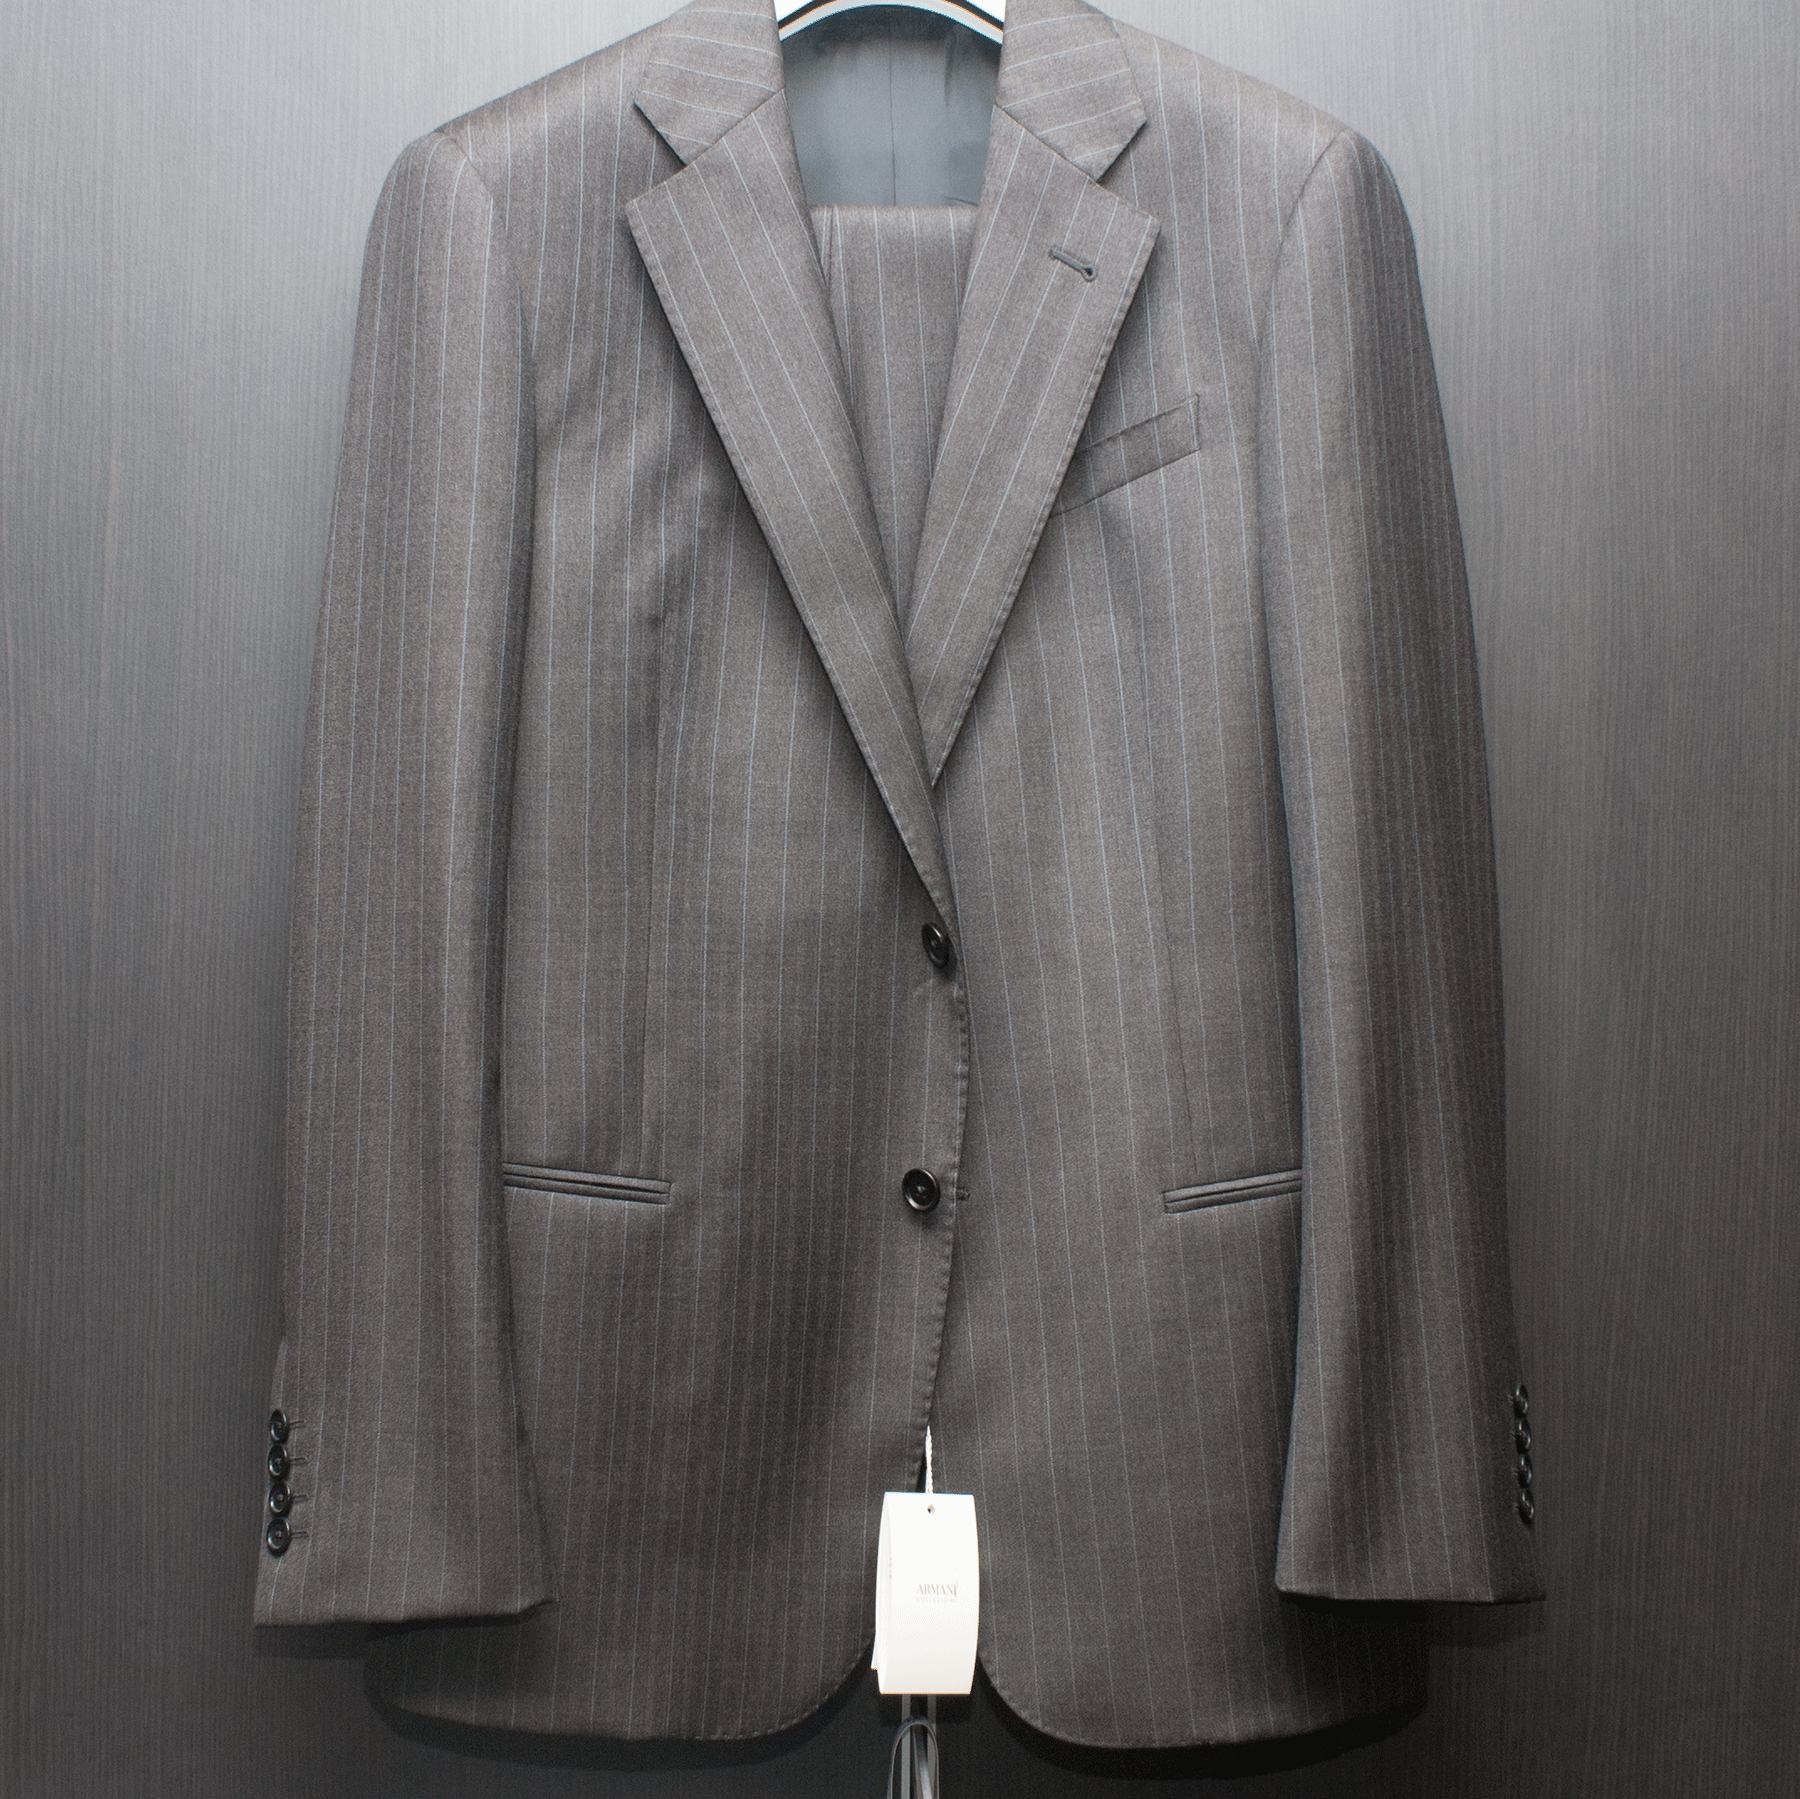 armani suit button replacement